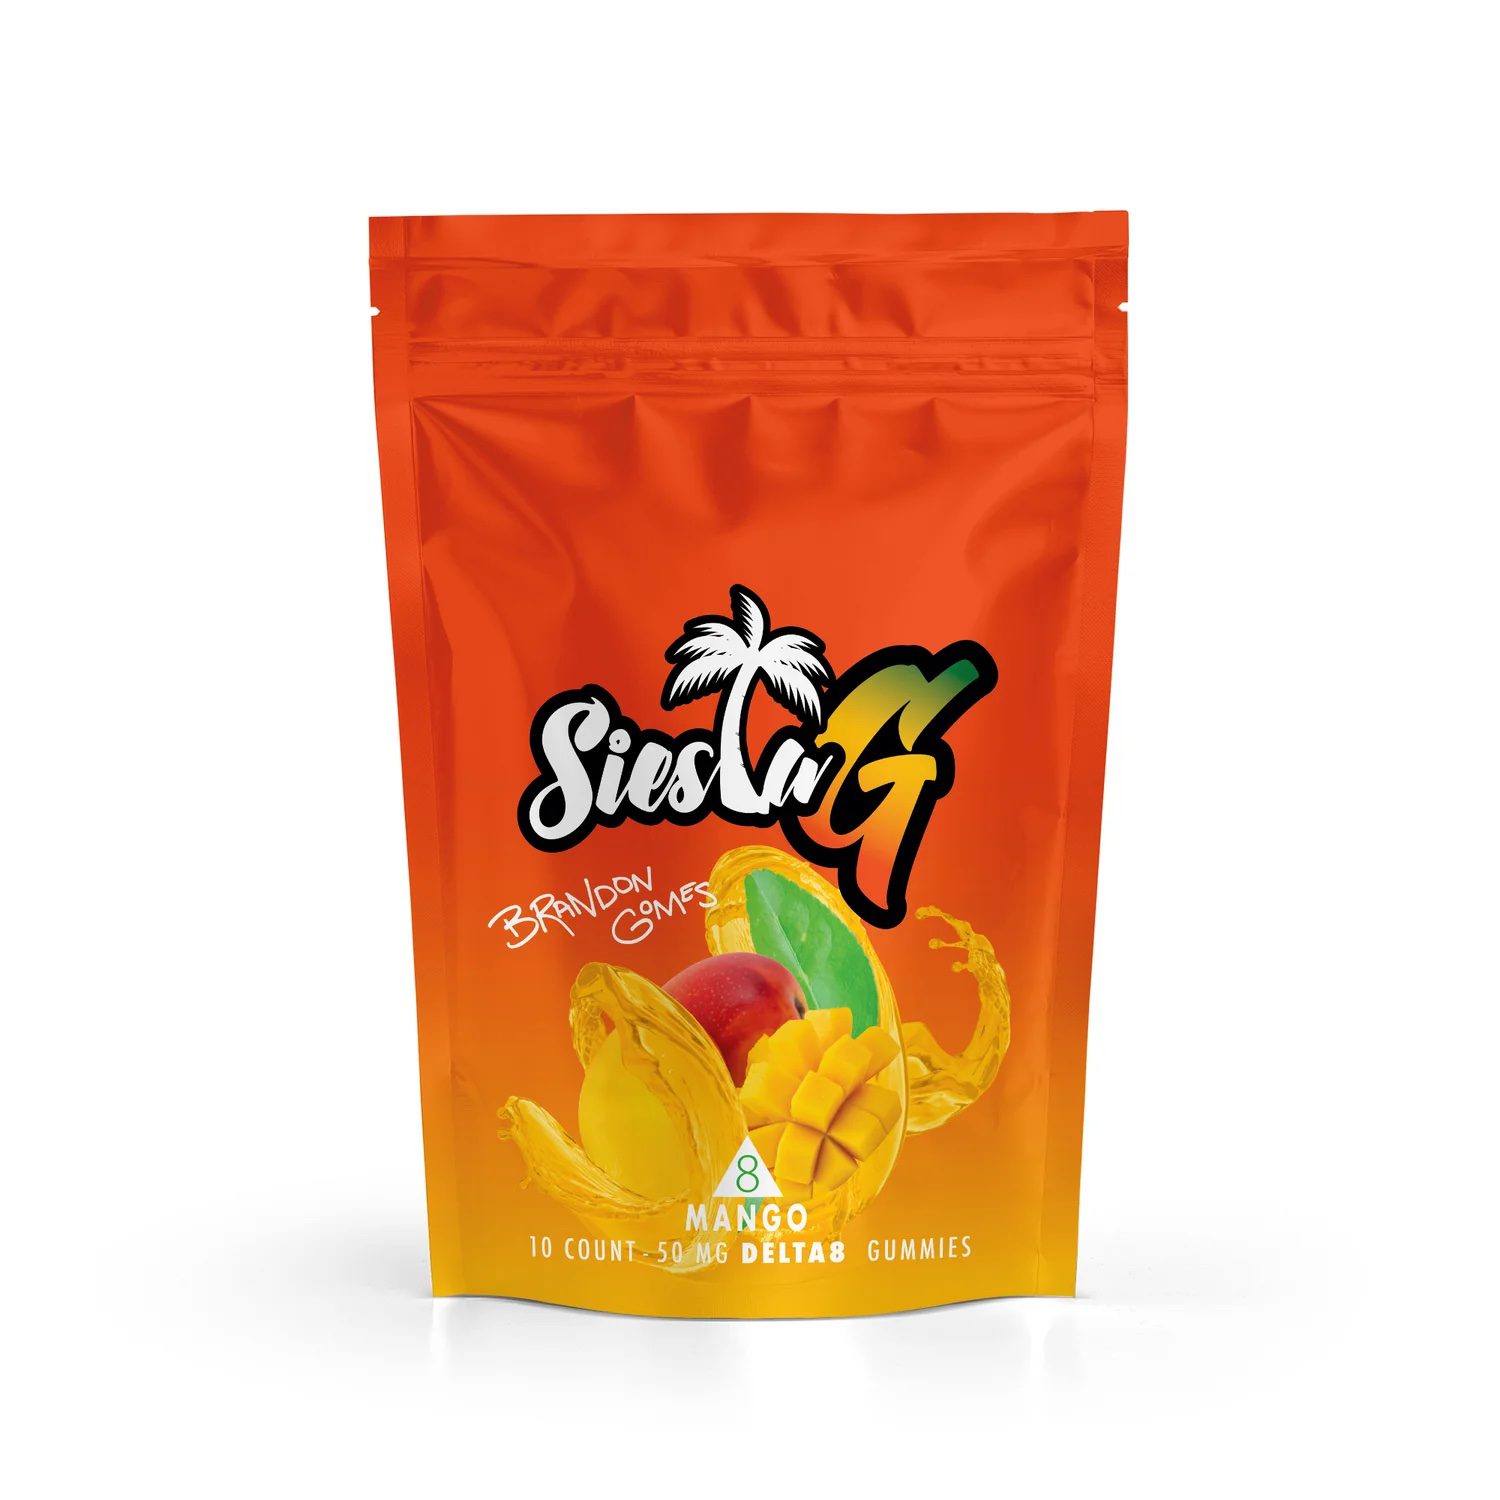 SiestaG Delta8 Gummies 50mg 10 count Mango (500mg)